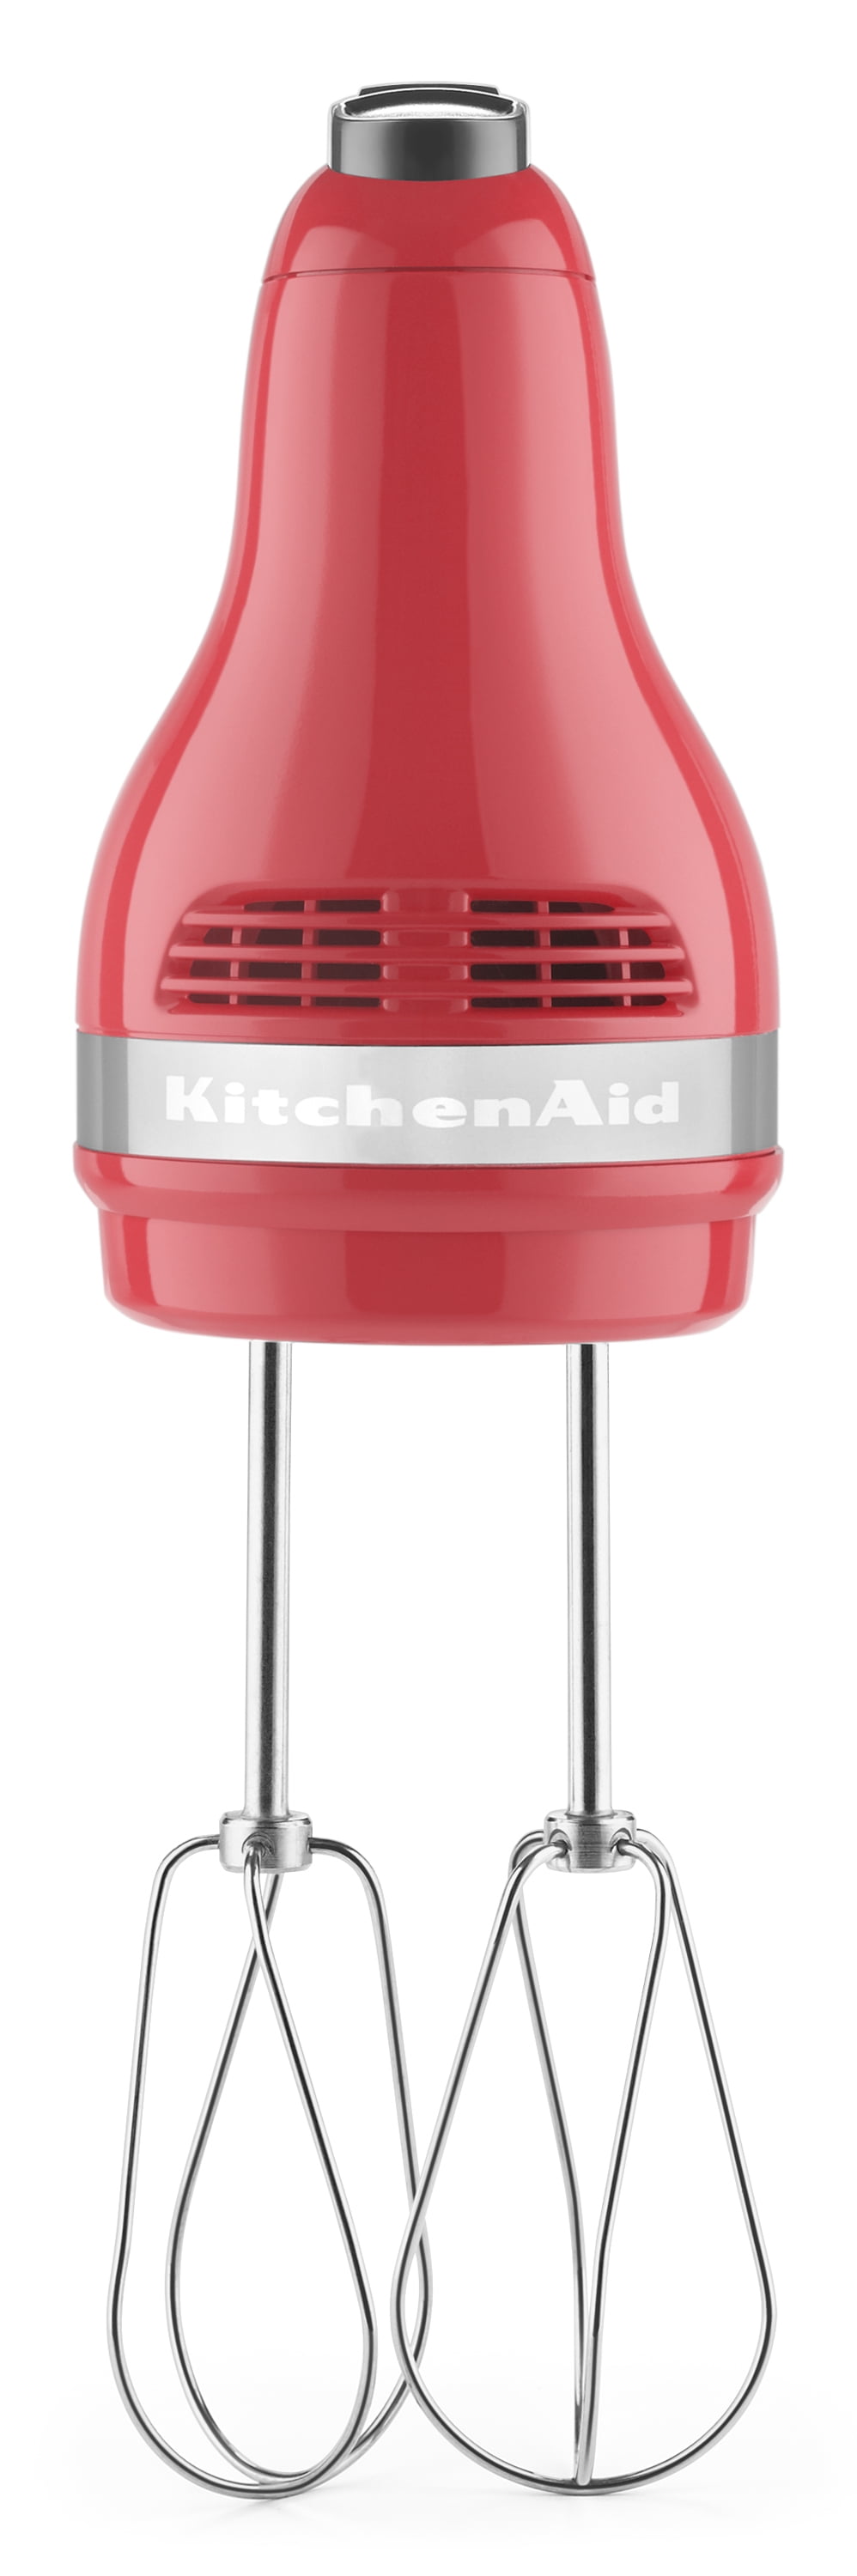 KitchenAid 5-Speed Ultra Power Hand Mixer, NFM